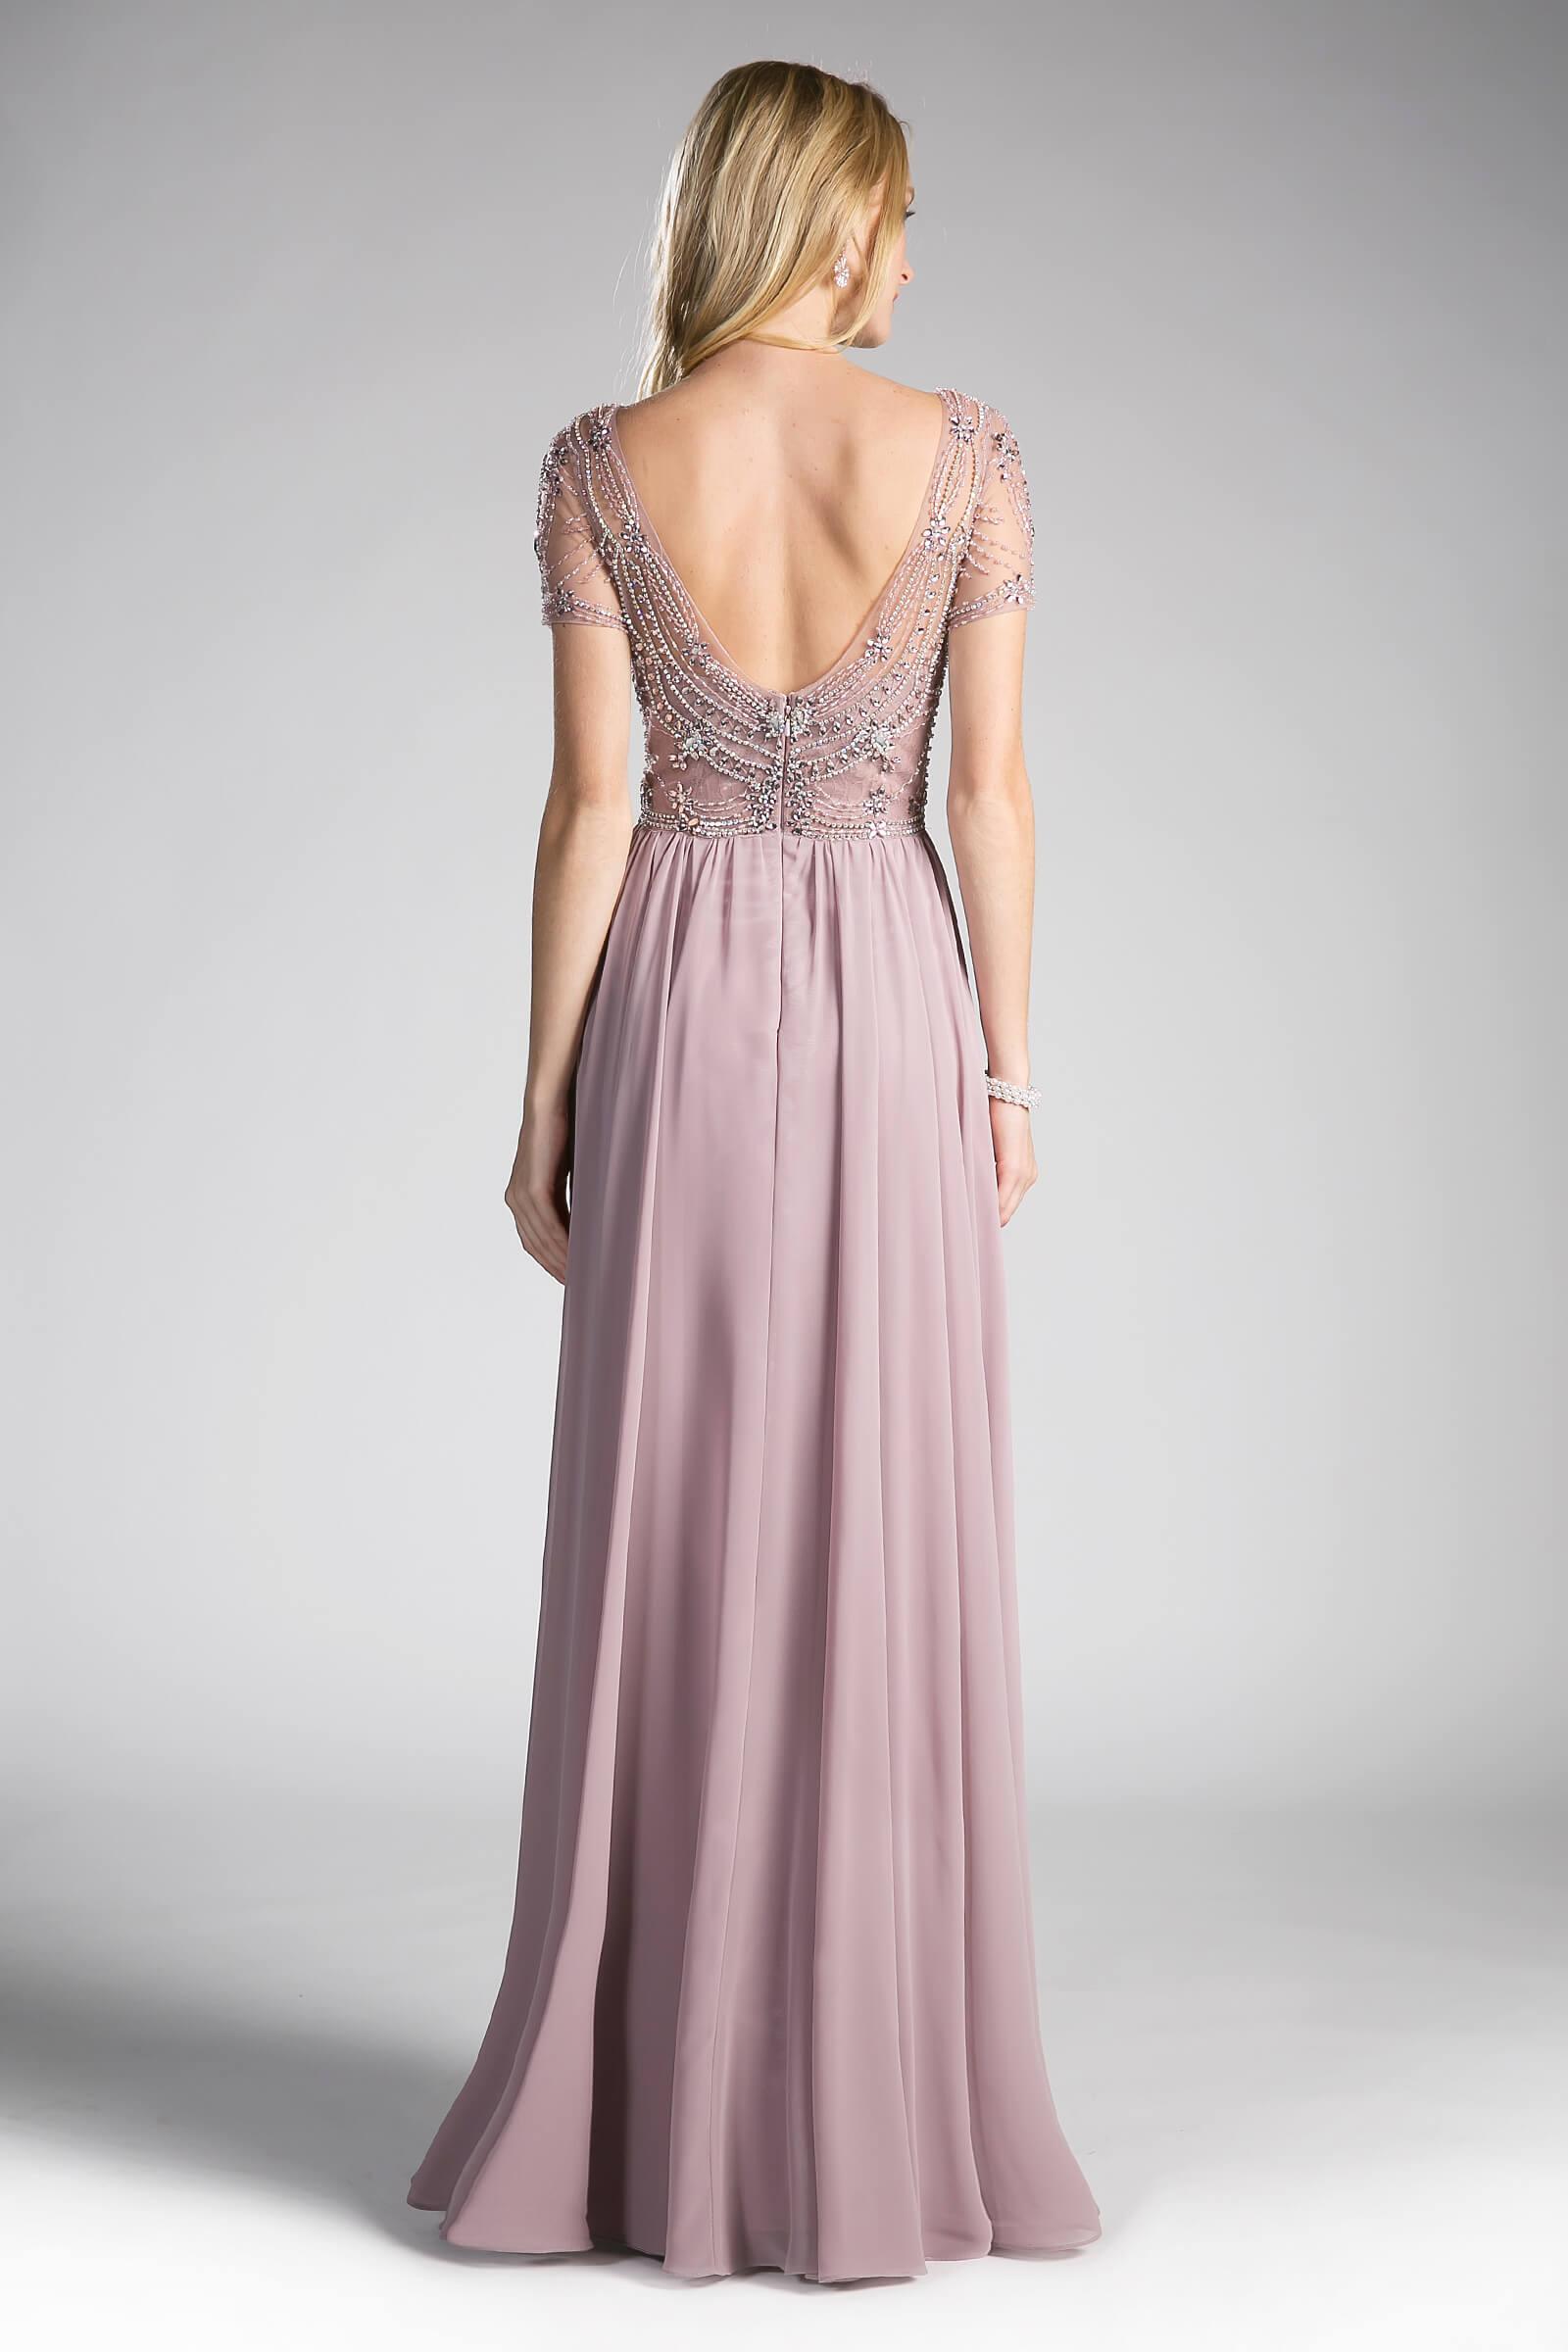 Cinderella Divine CD0123 Long Dress Formal Evening Gown for $68.99 ...